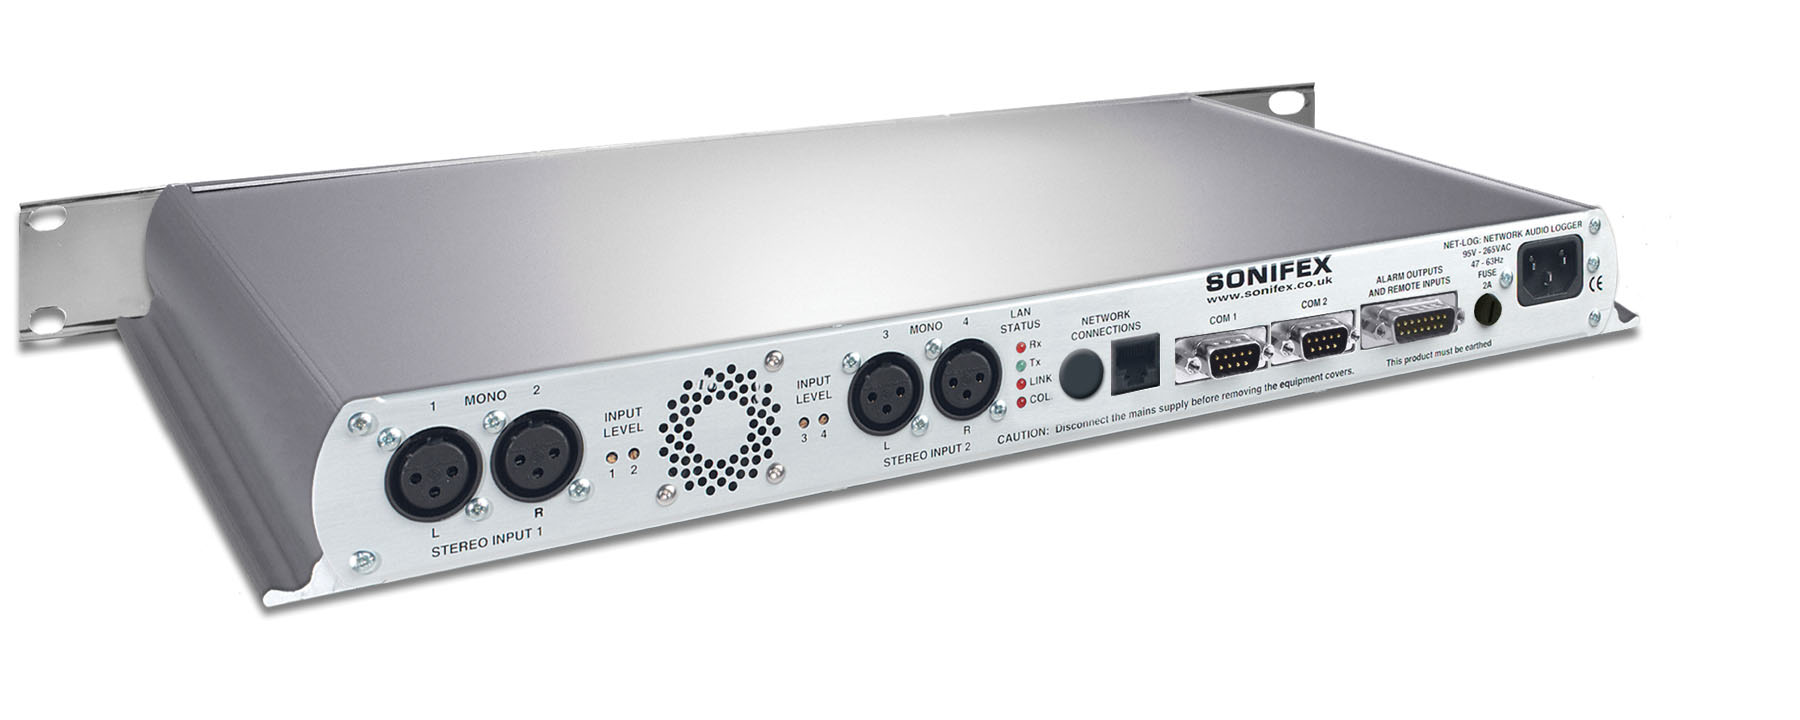 Tascam HS-20. Sonifex cm-cu21 комментаторский блок. Nr-700nt. Sonifex Audio Control.